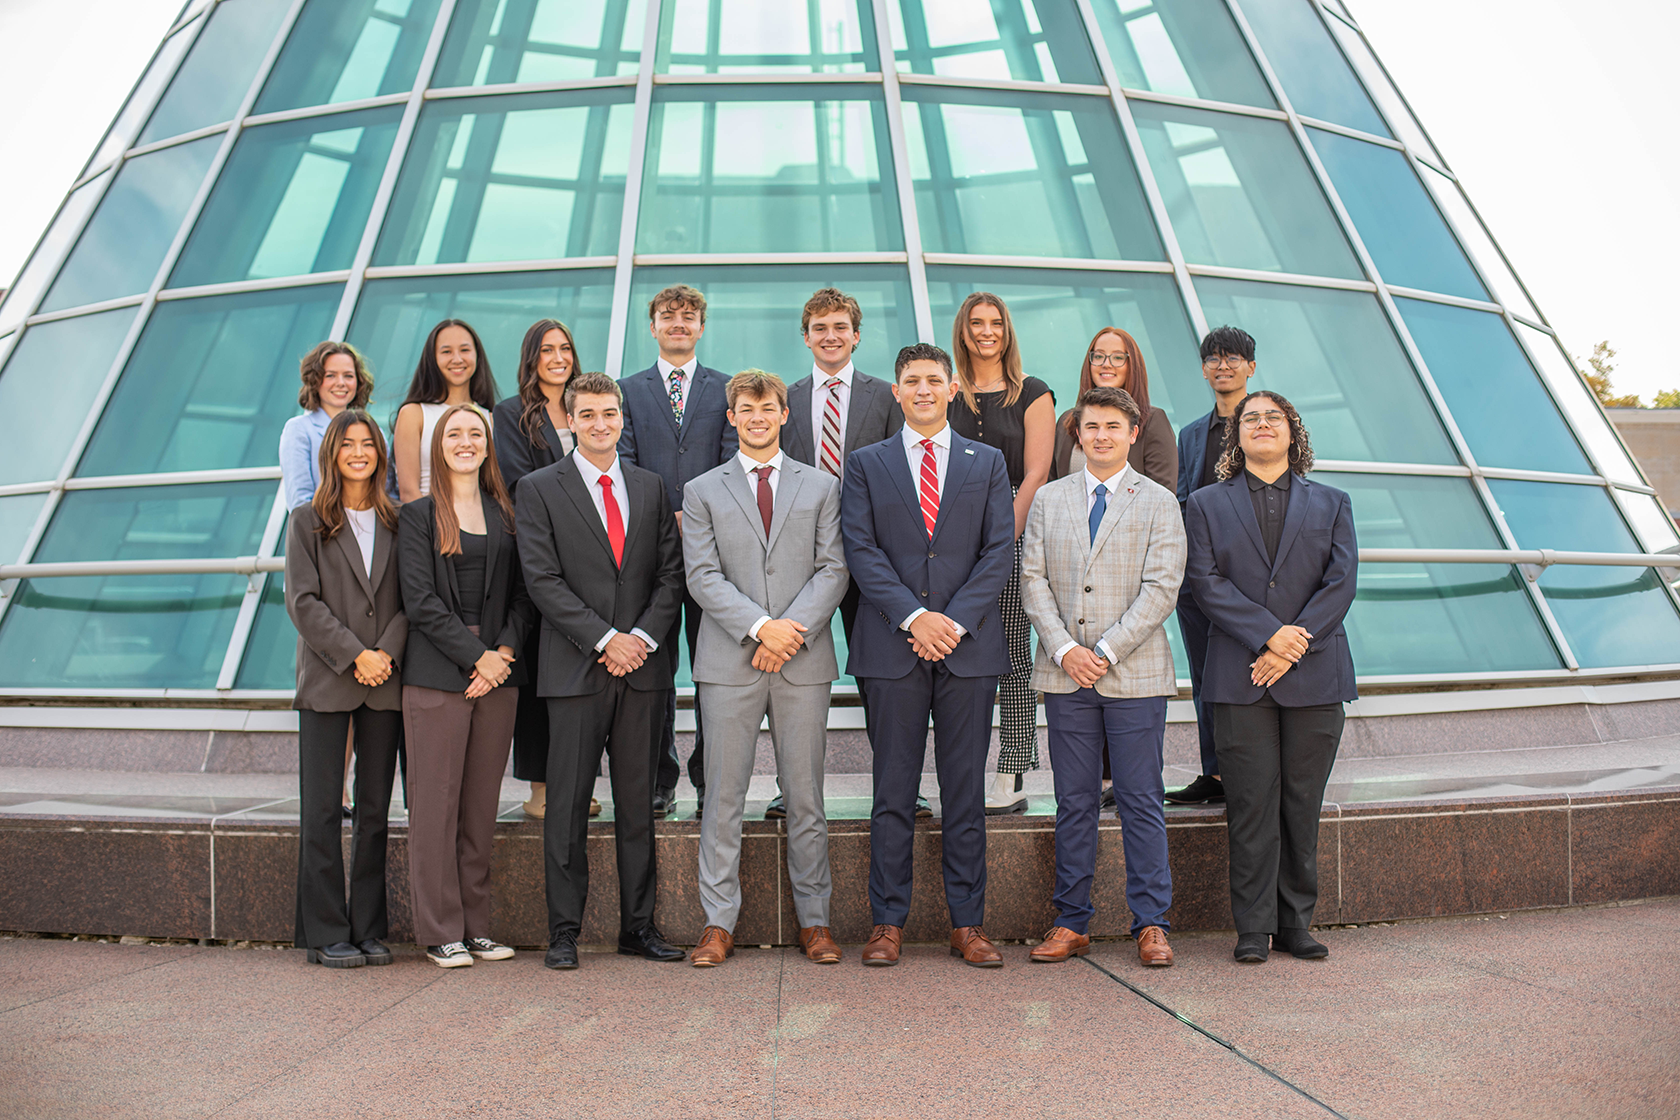 Group photo of the ASWSU 2023-2024 executive branch team